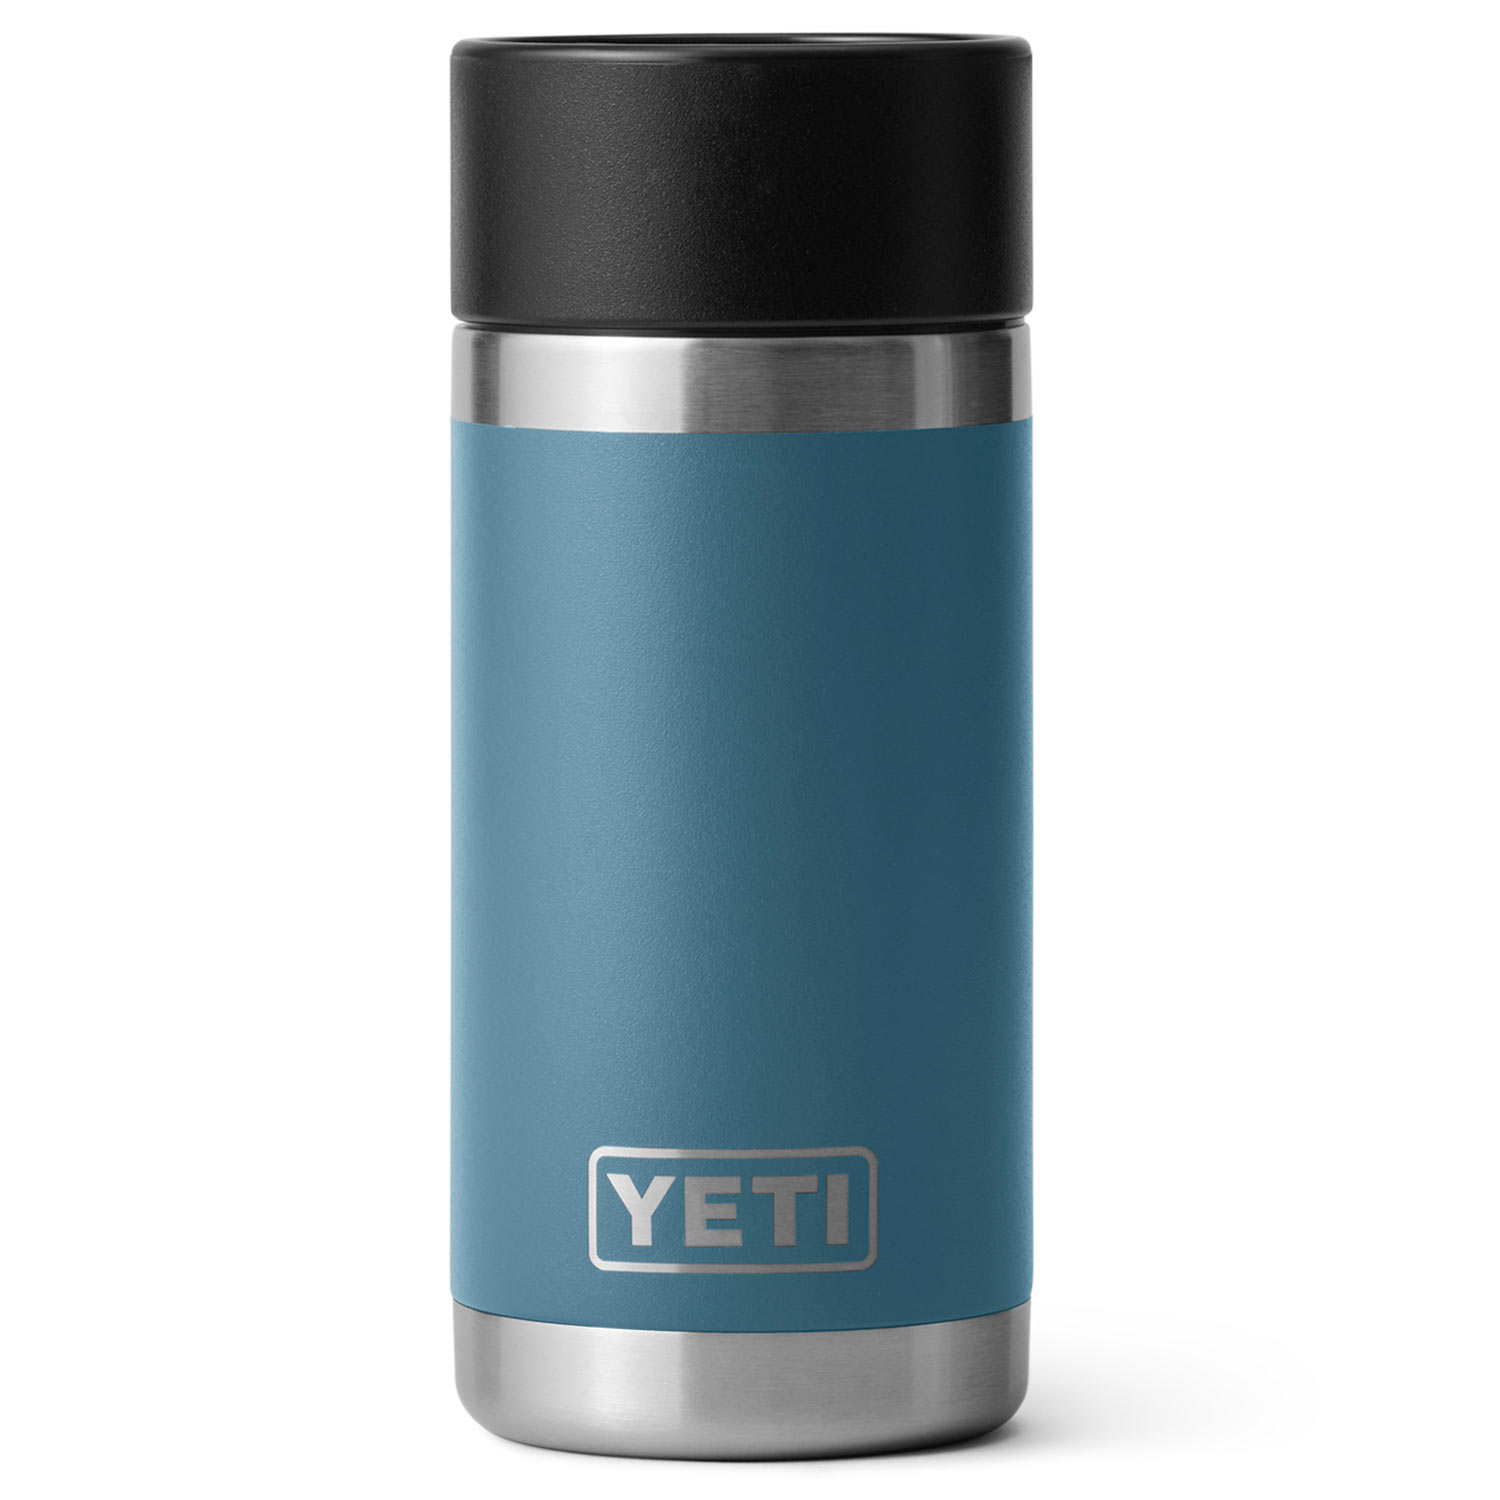 YETI Rambler 12 oz. Insulated Bottle with HotShot Cap Lid